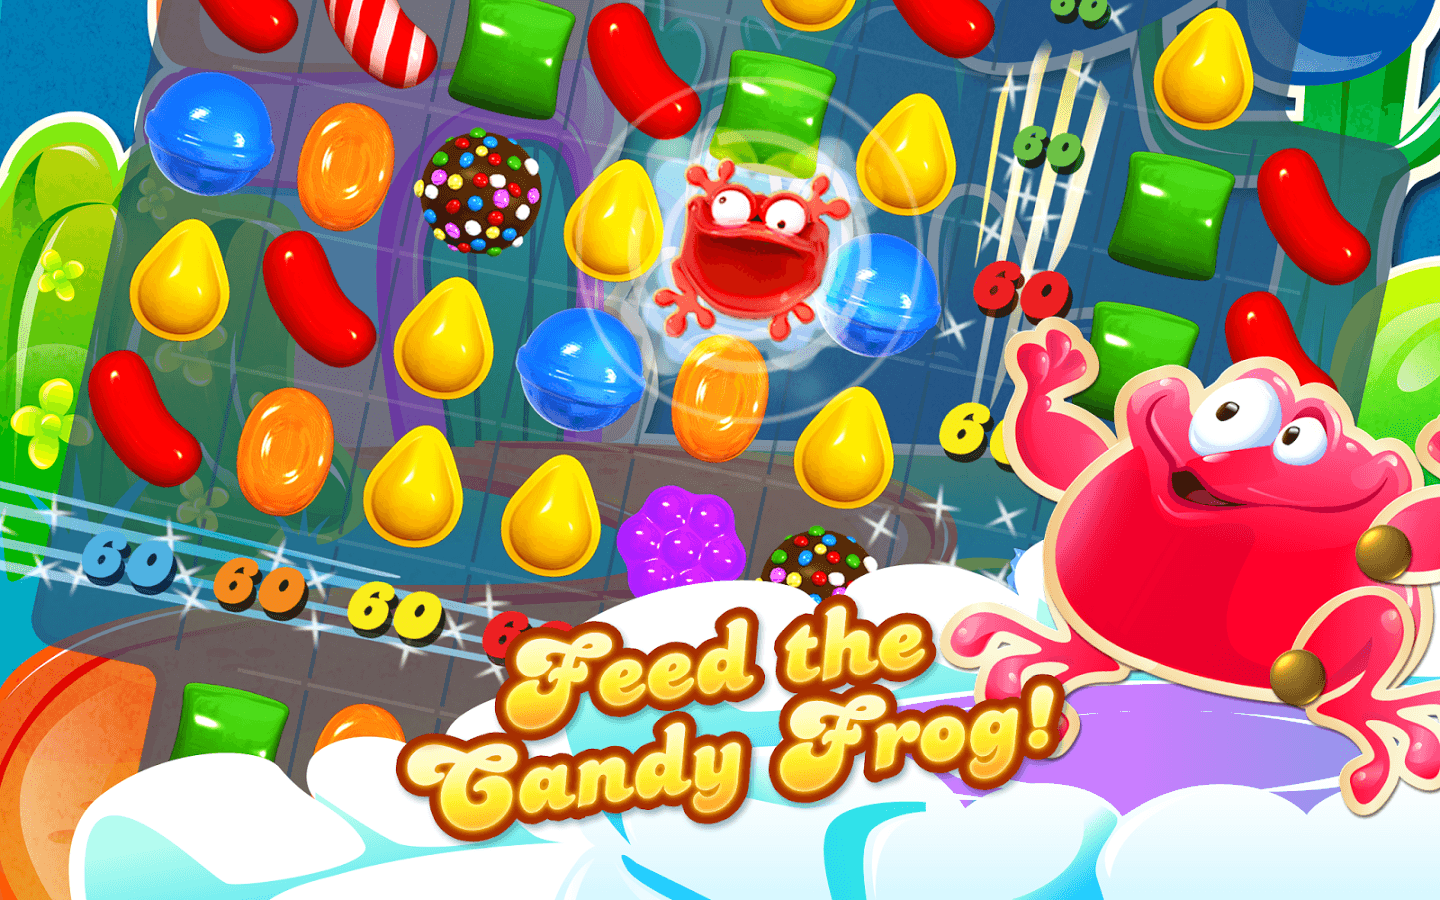 Candy Crush Saga hits $20 billion revenue milestone, maker King